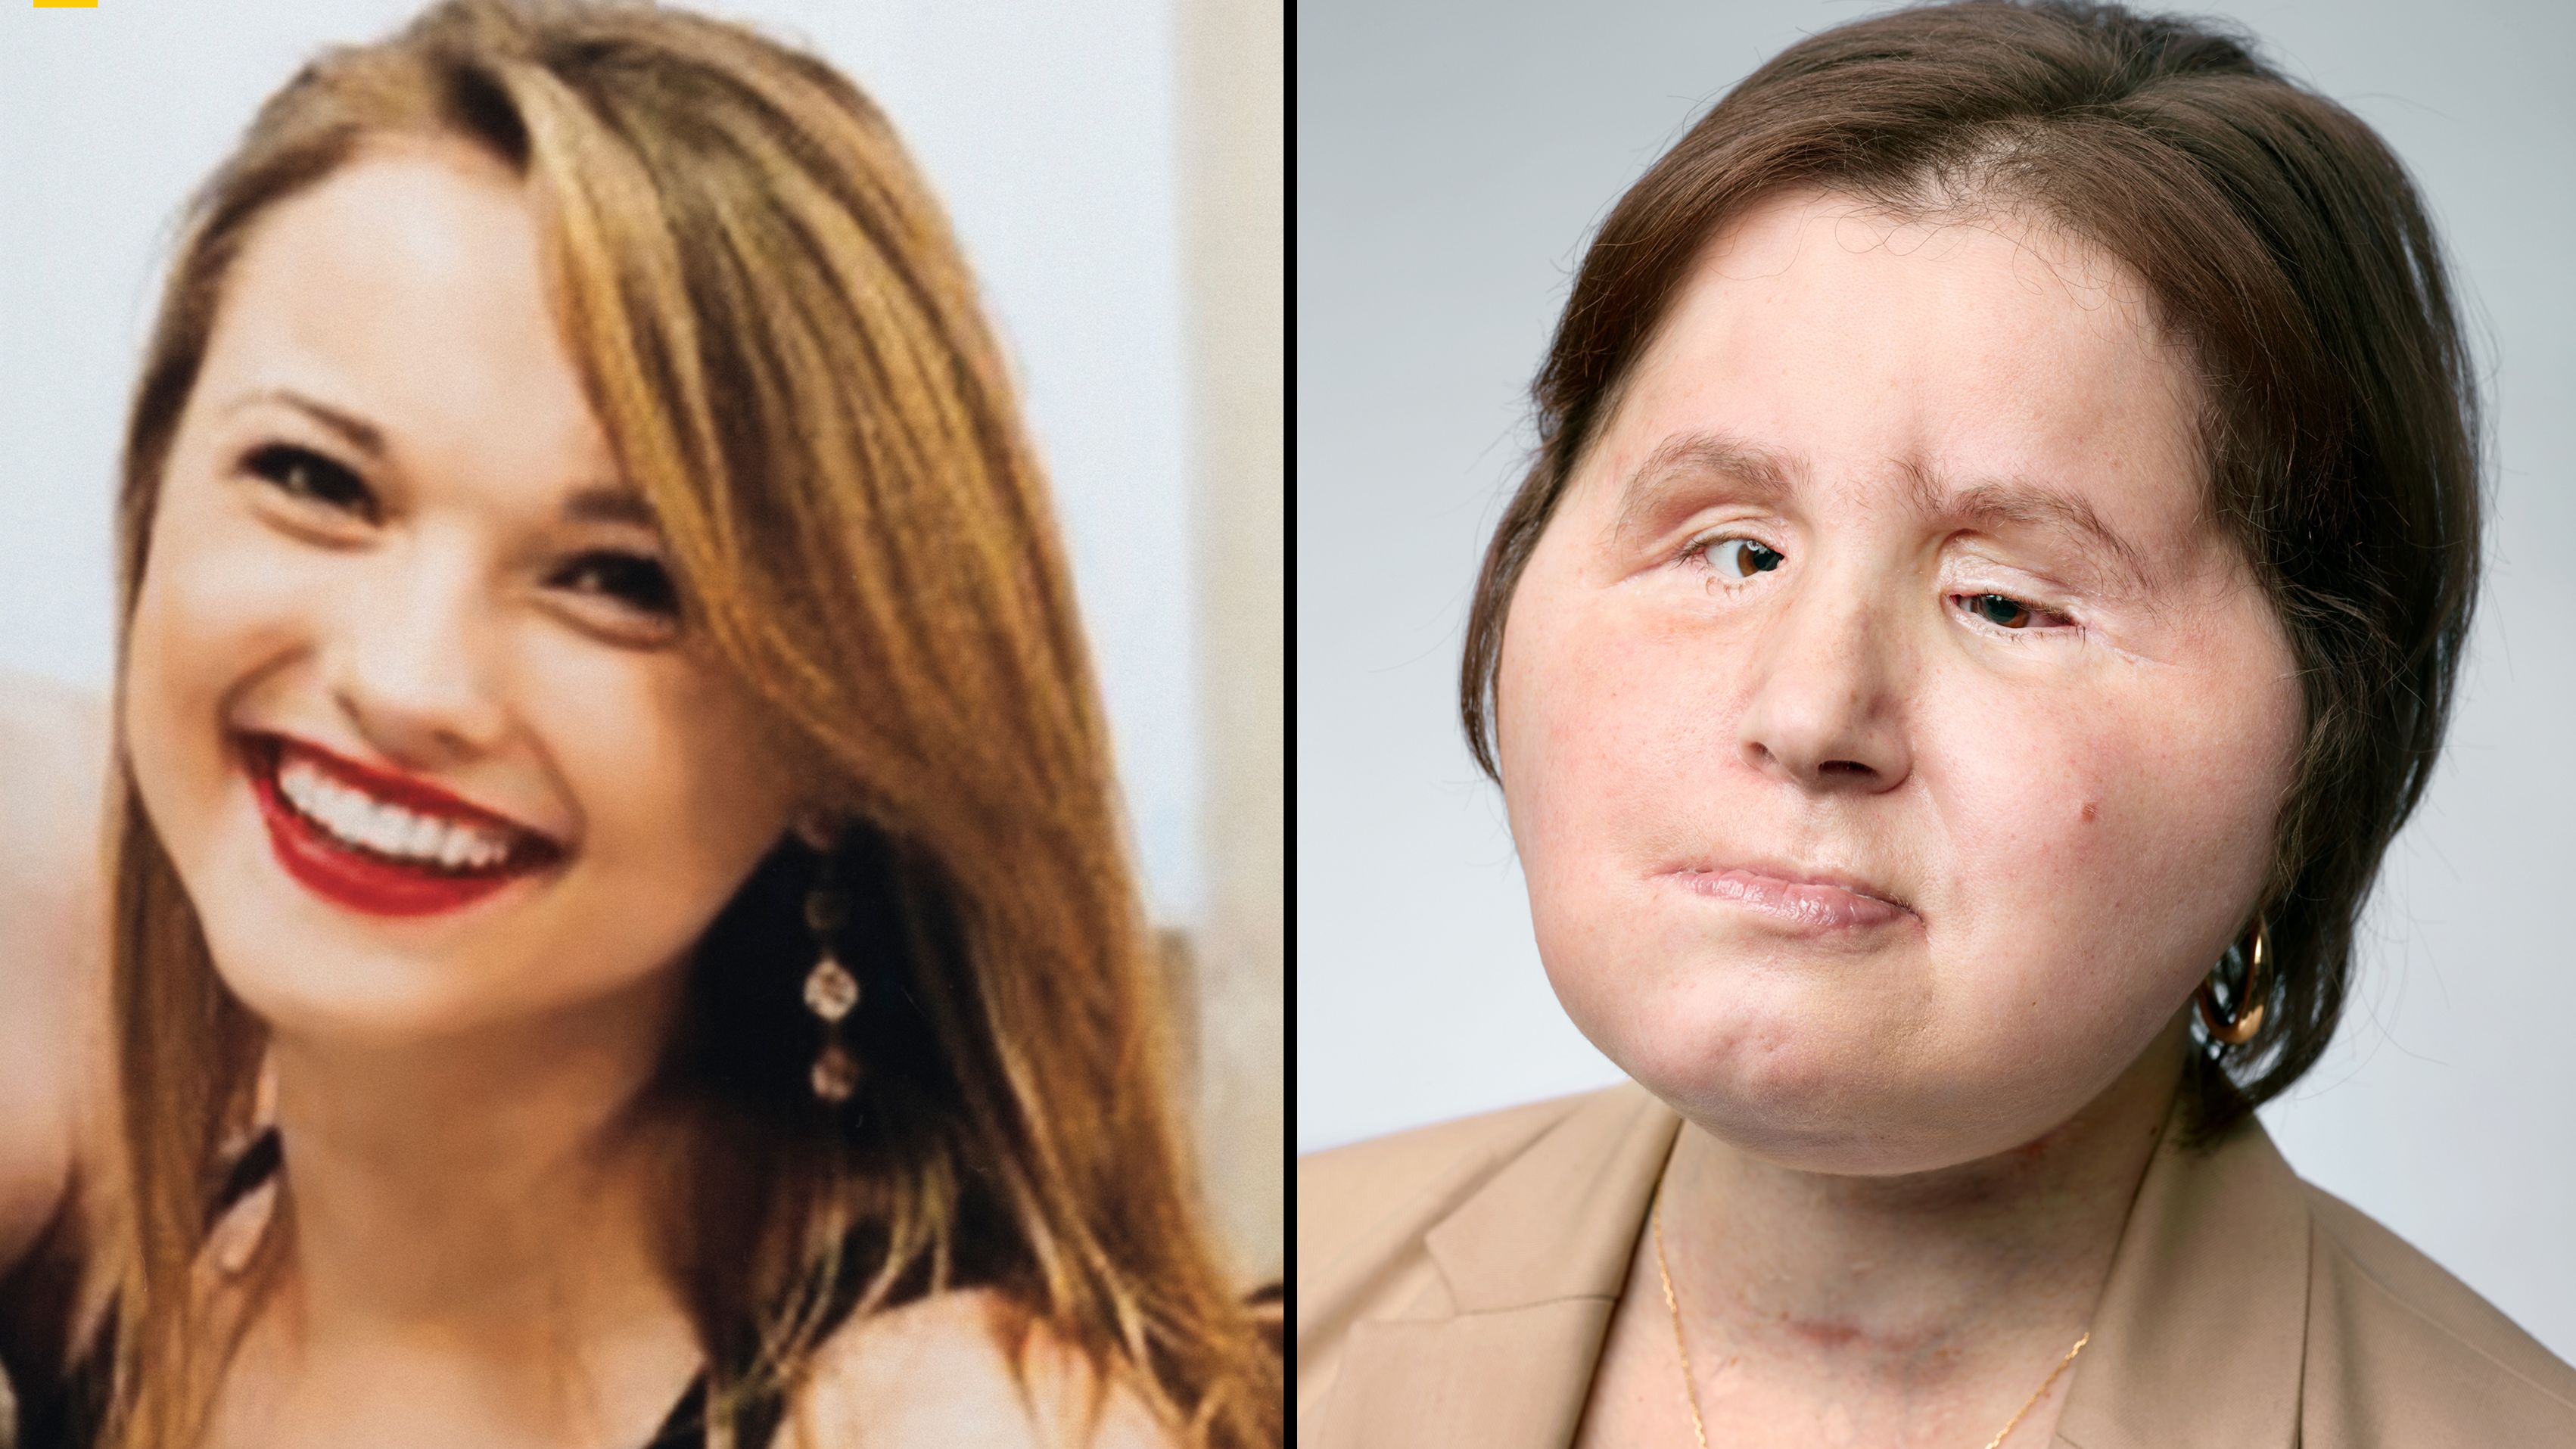 Girl Teen Blow Job - Katie Stubblefield: Face transplant gives suicide survivor a 'second  chance' | CNN